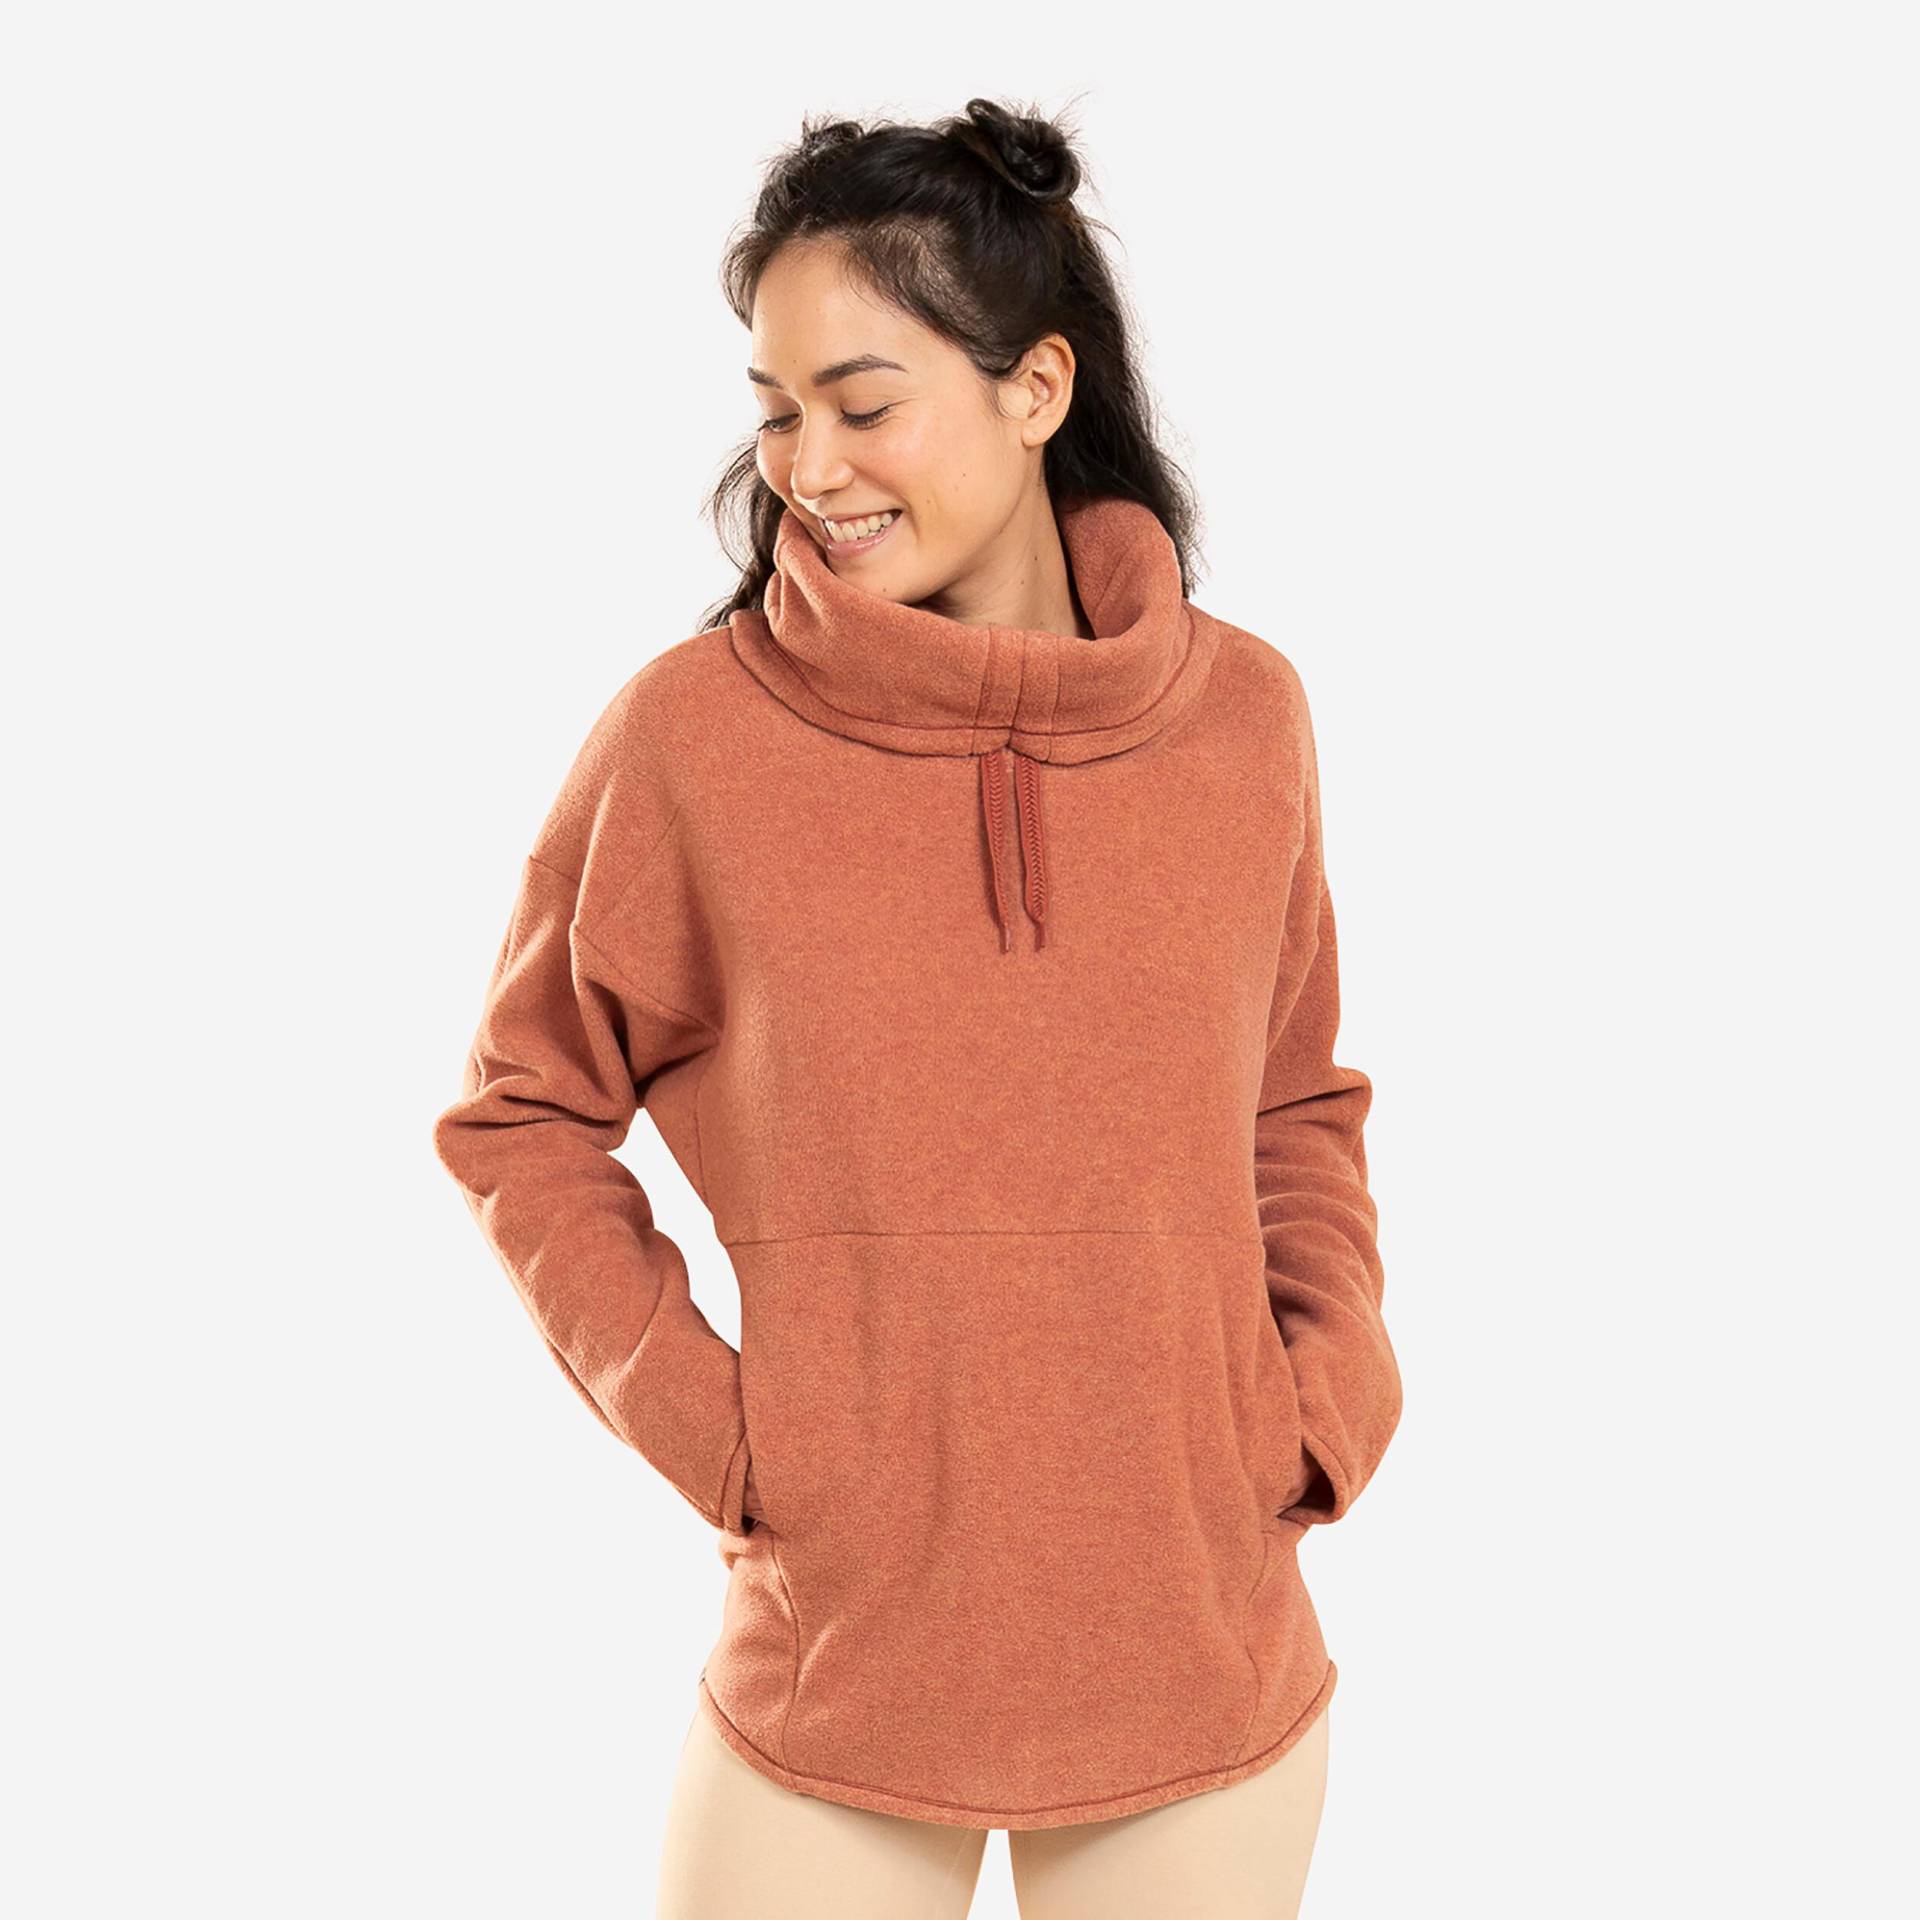 Sweatshirt Yoga Entspannung Fleece Damen Braun XL von KIMJALY